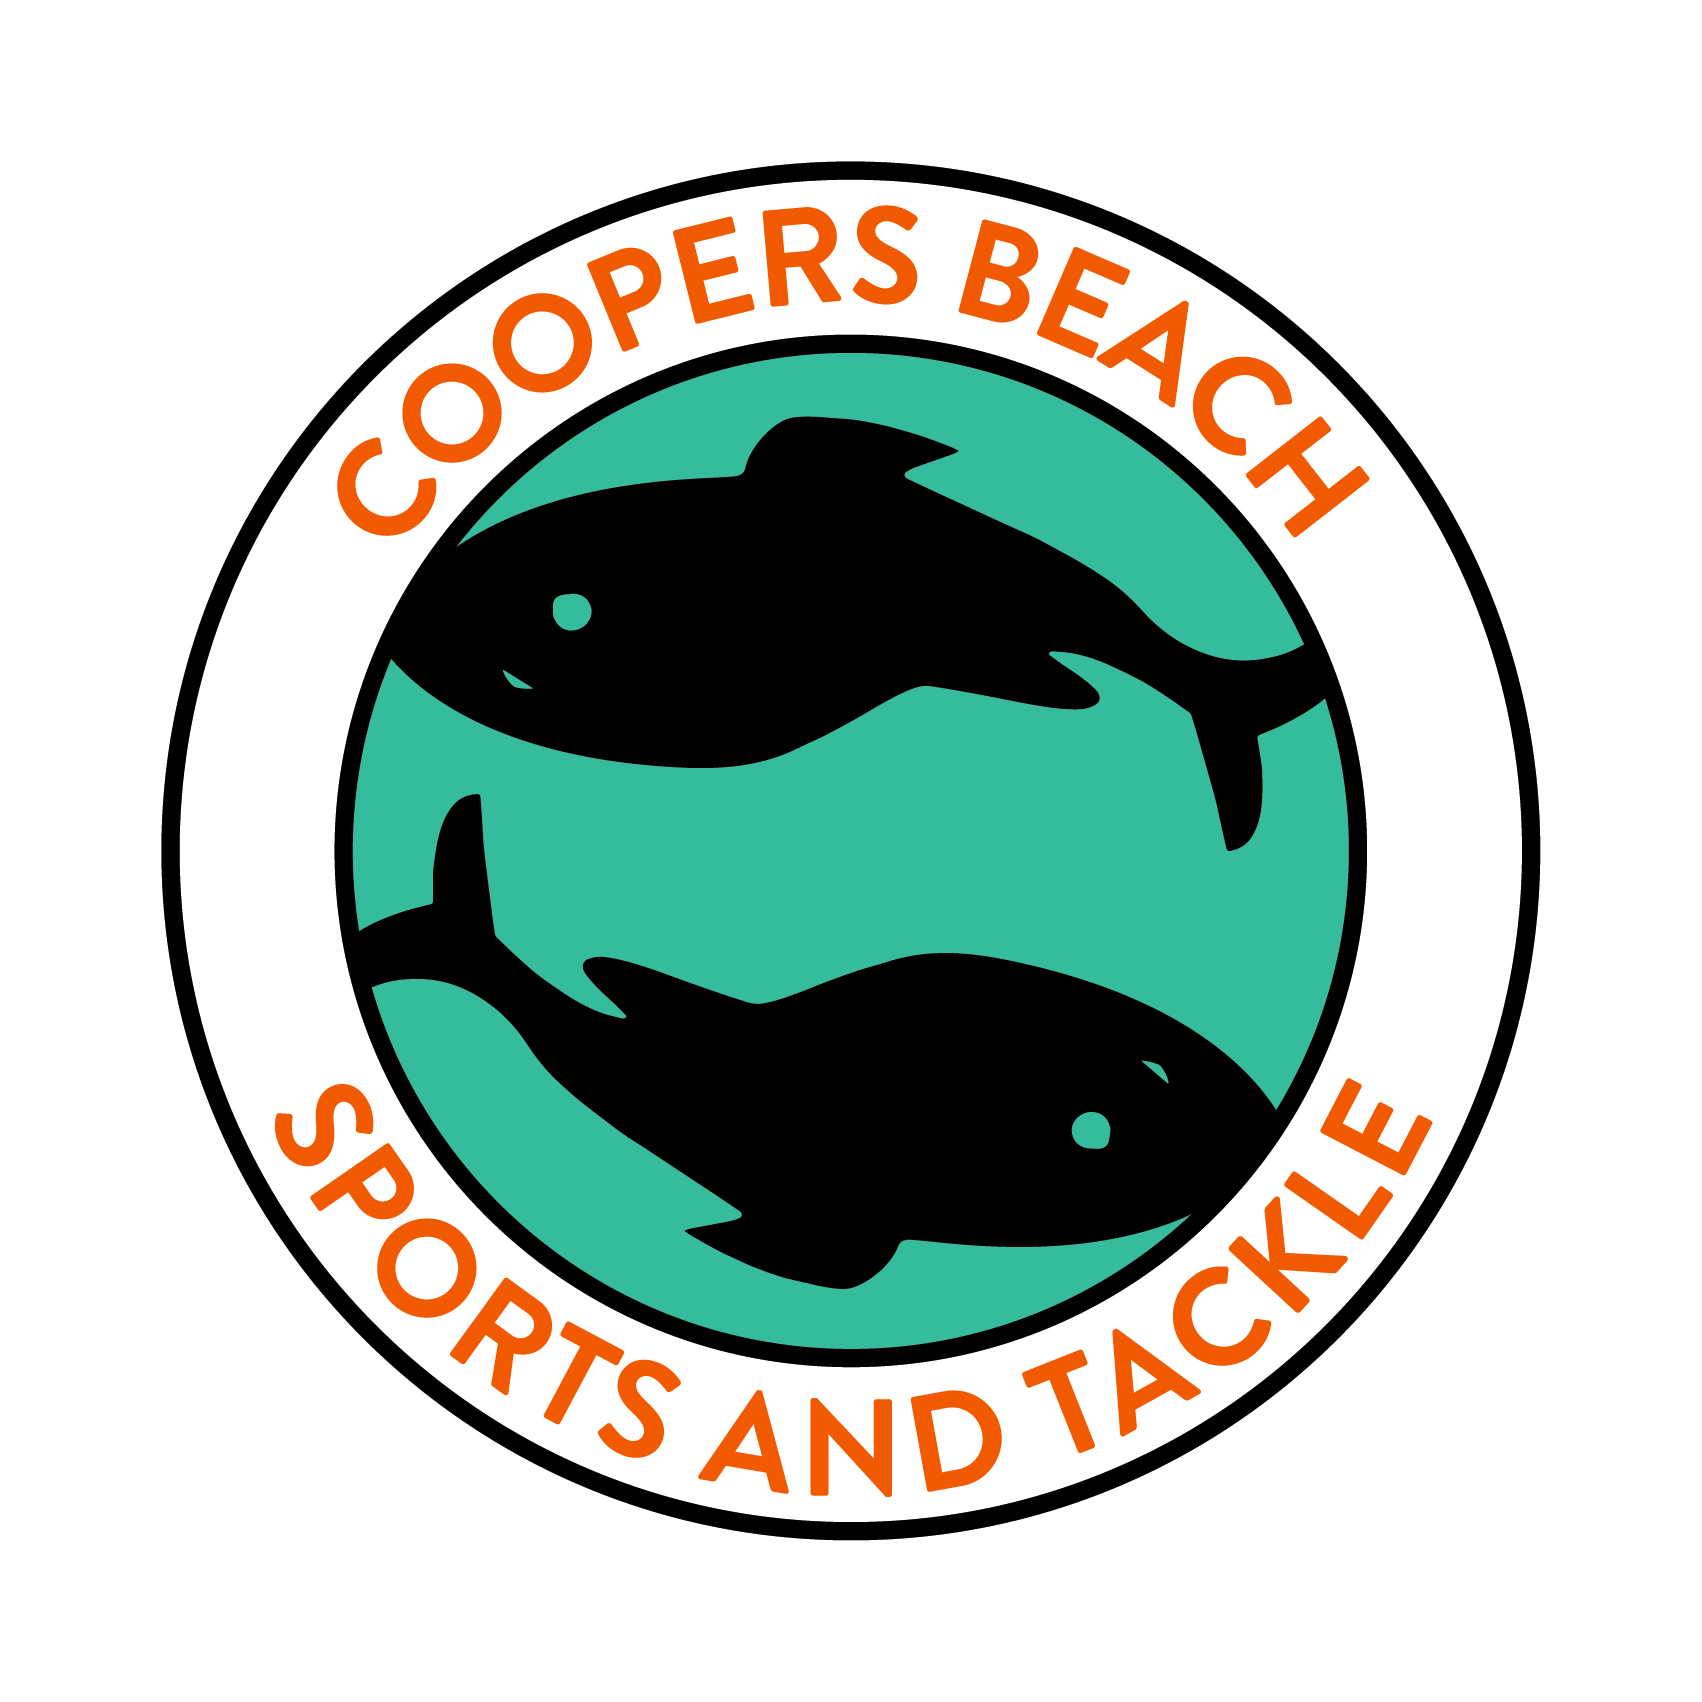 Cooper's beach